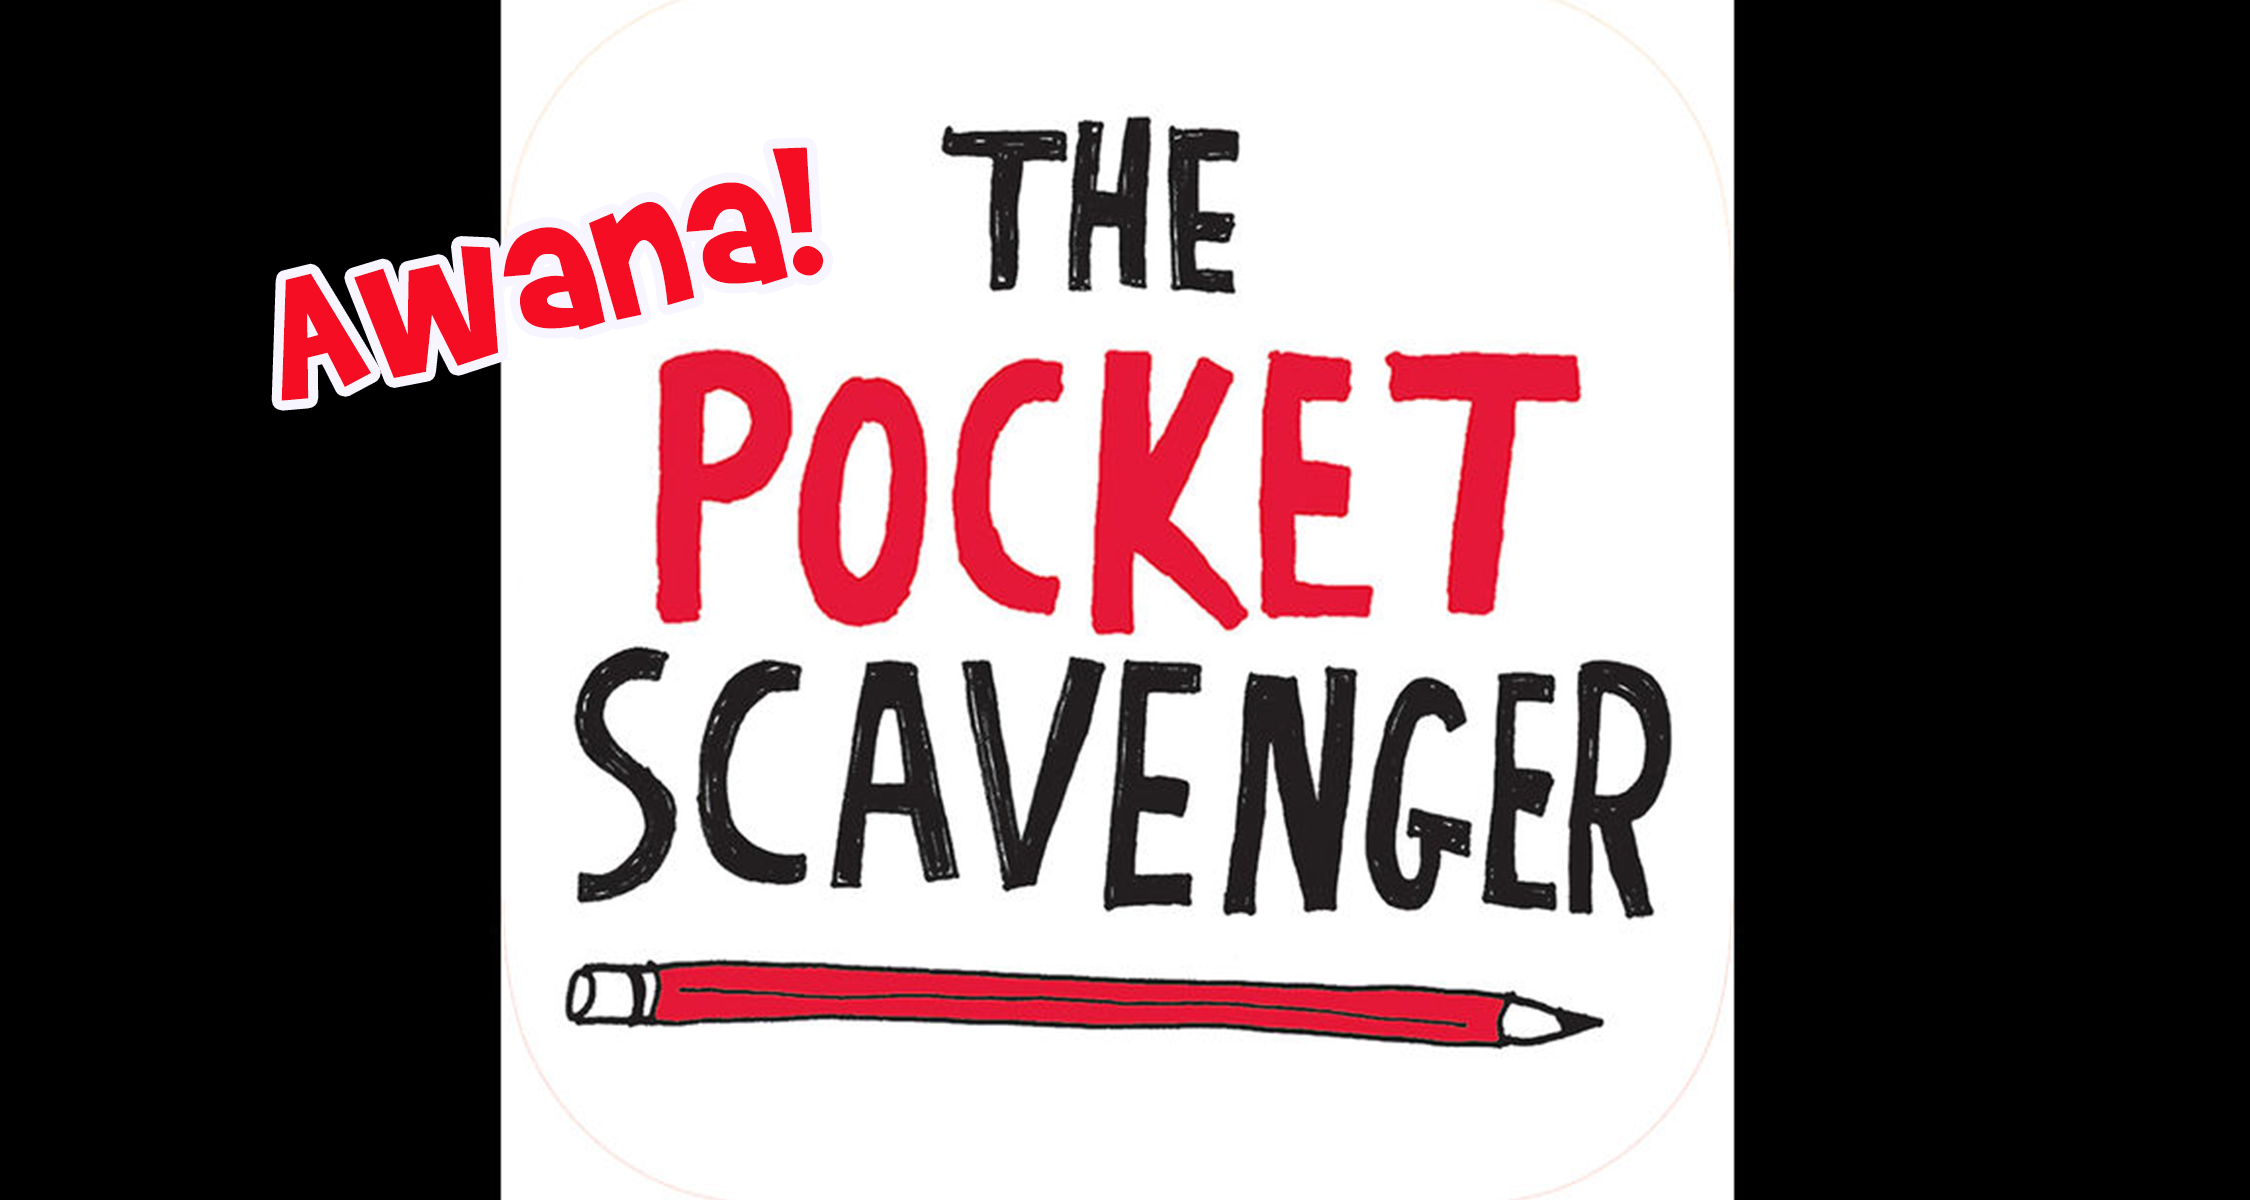 Awana Pocket Scavenger Night image